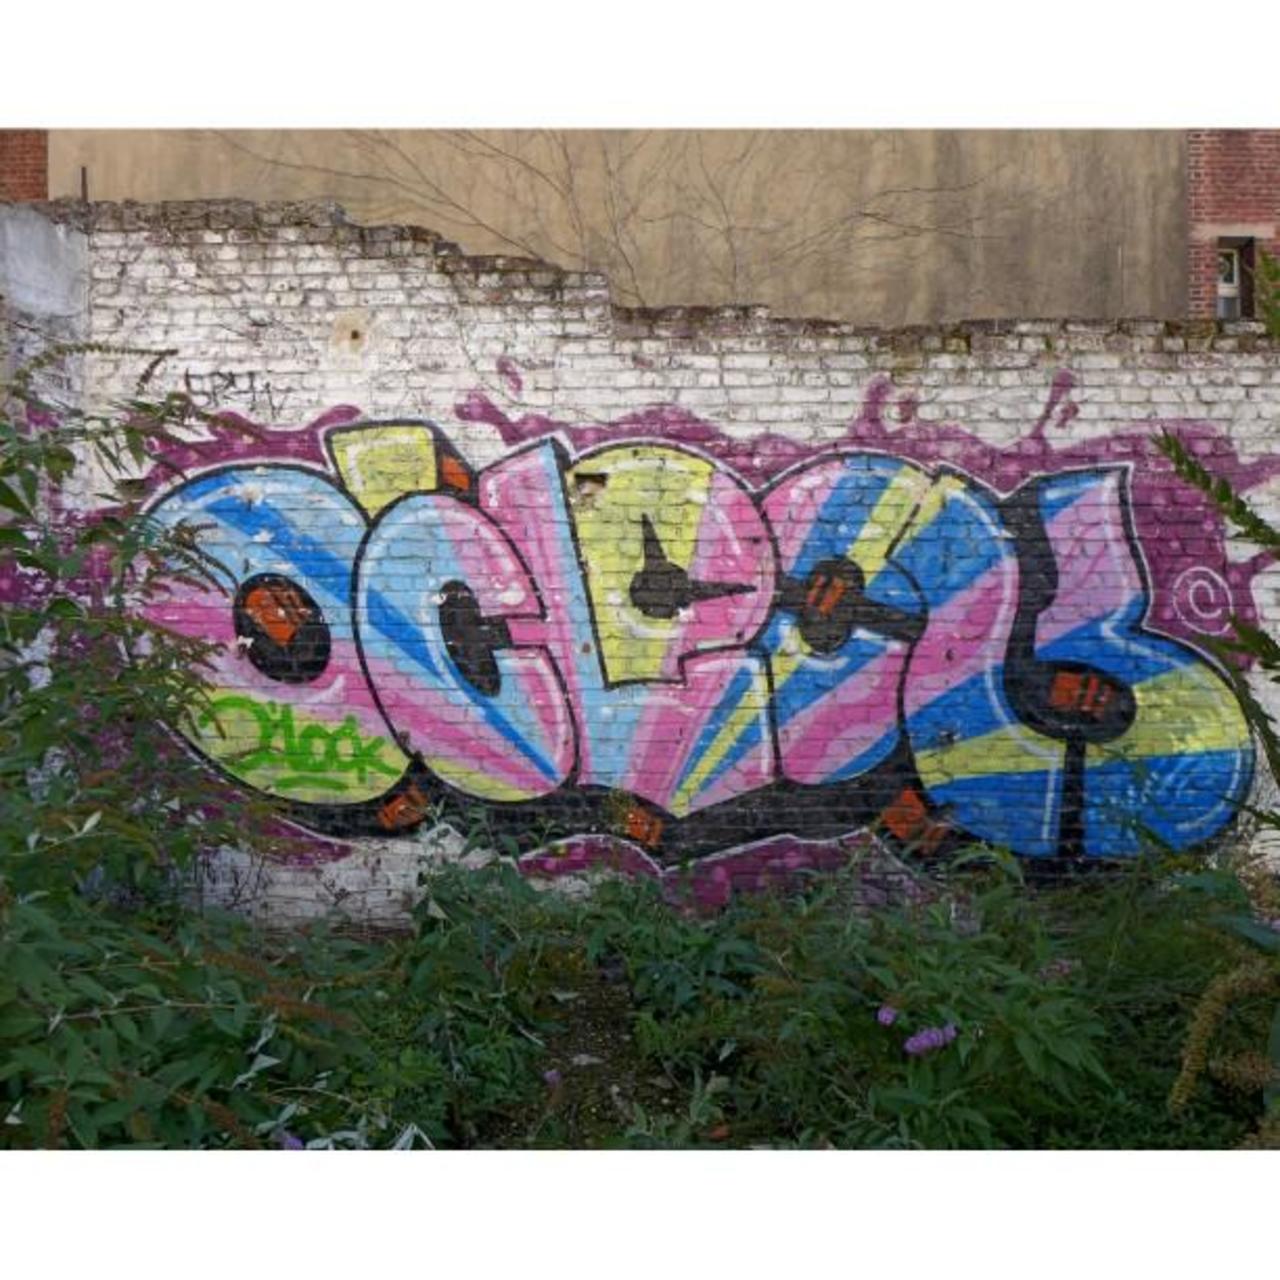 #Paris #graffiti photo by @maxdimontemarciano http://ift.tt/1LVxwMx #StreetArt http://t.co/qstsm3MxIo